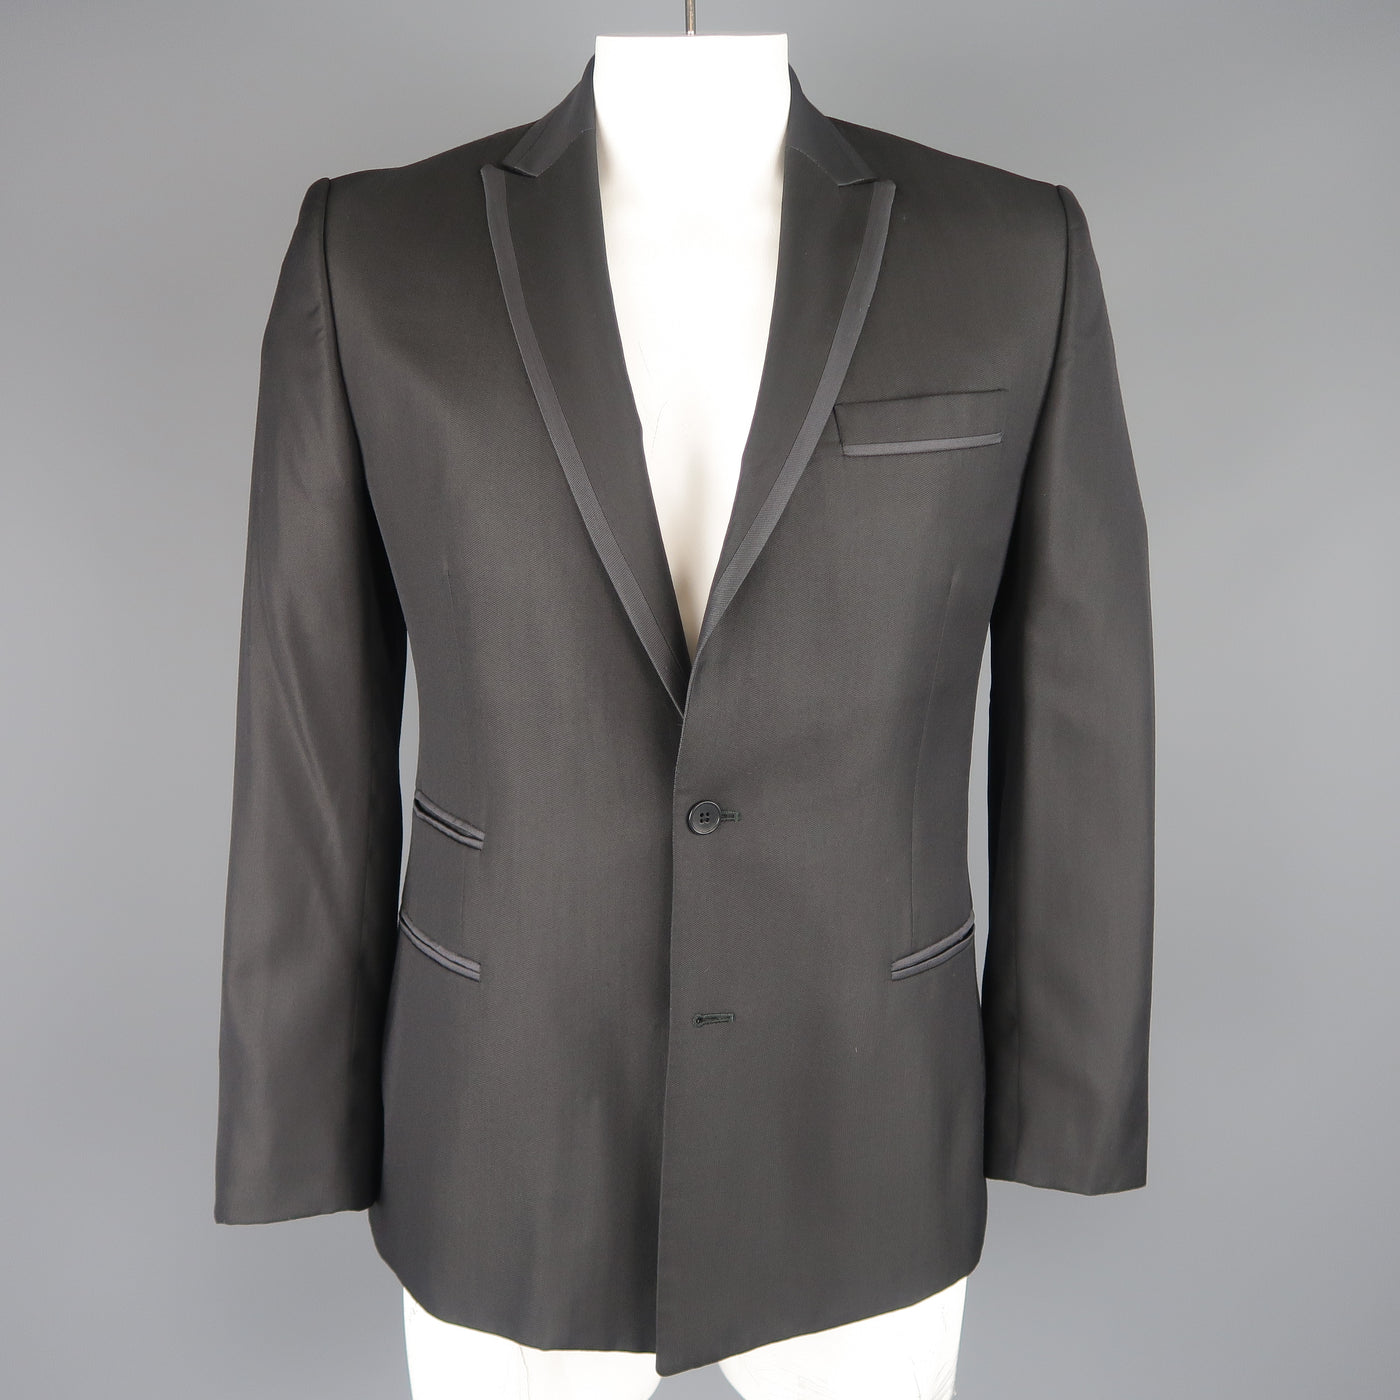 JUST CAVALLI 42 Black Wool Blend Satin Piping Peak Lapel Sport Coat Jacket